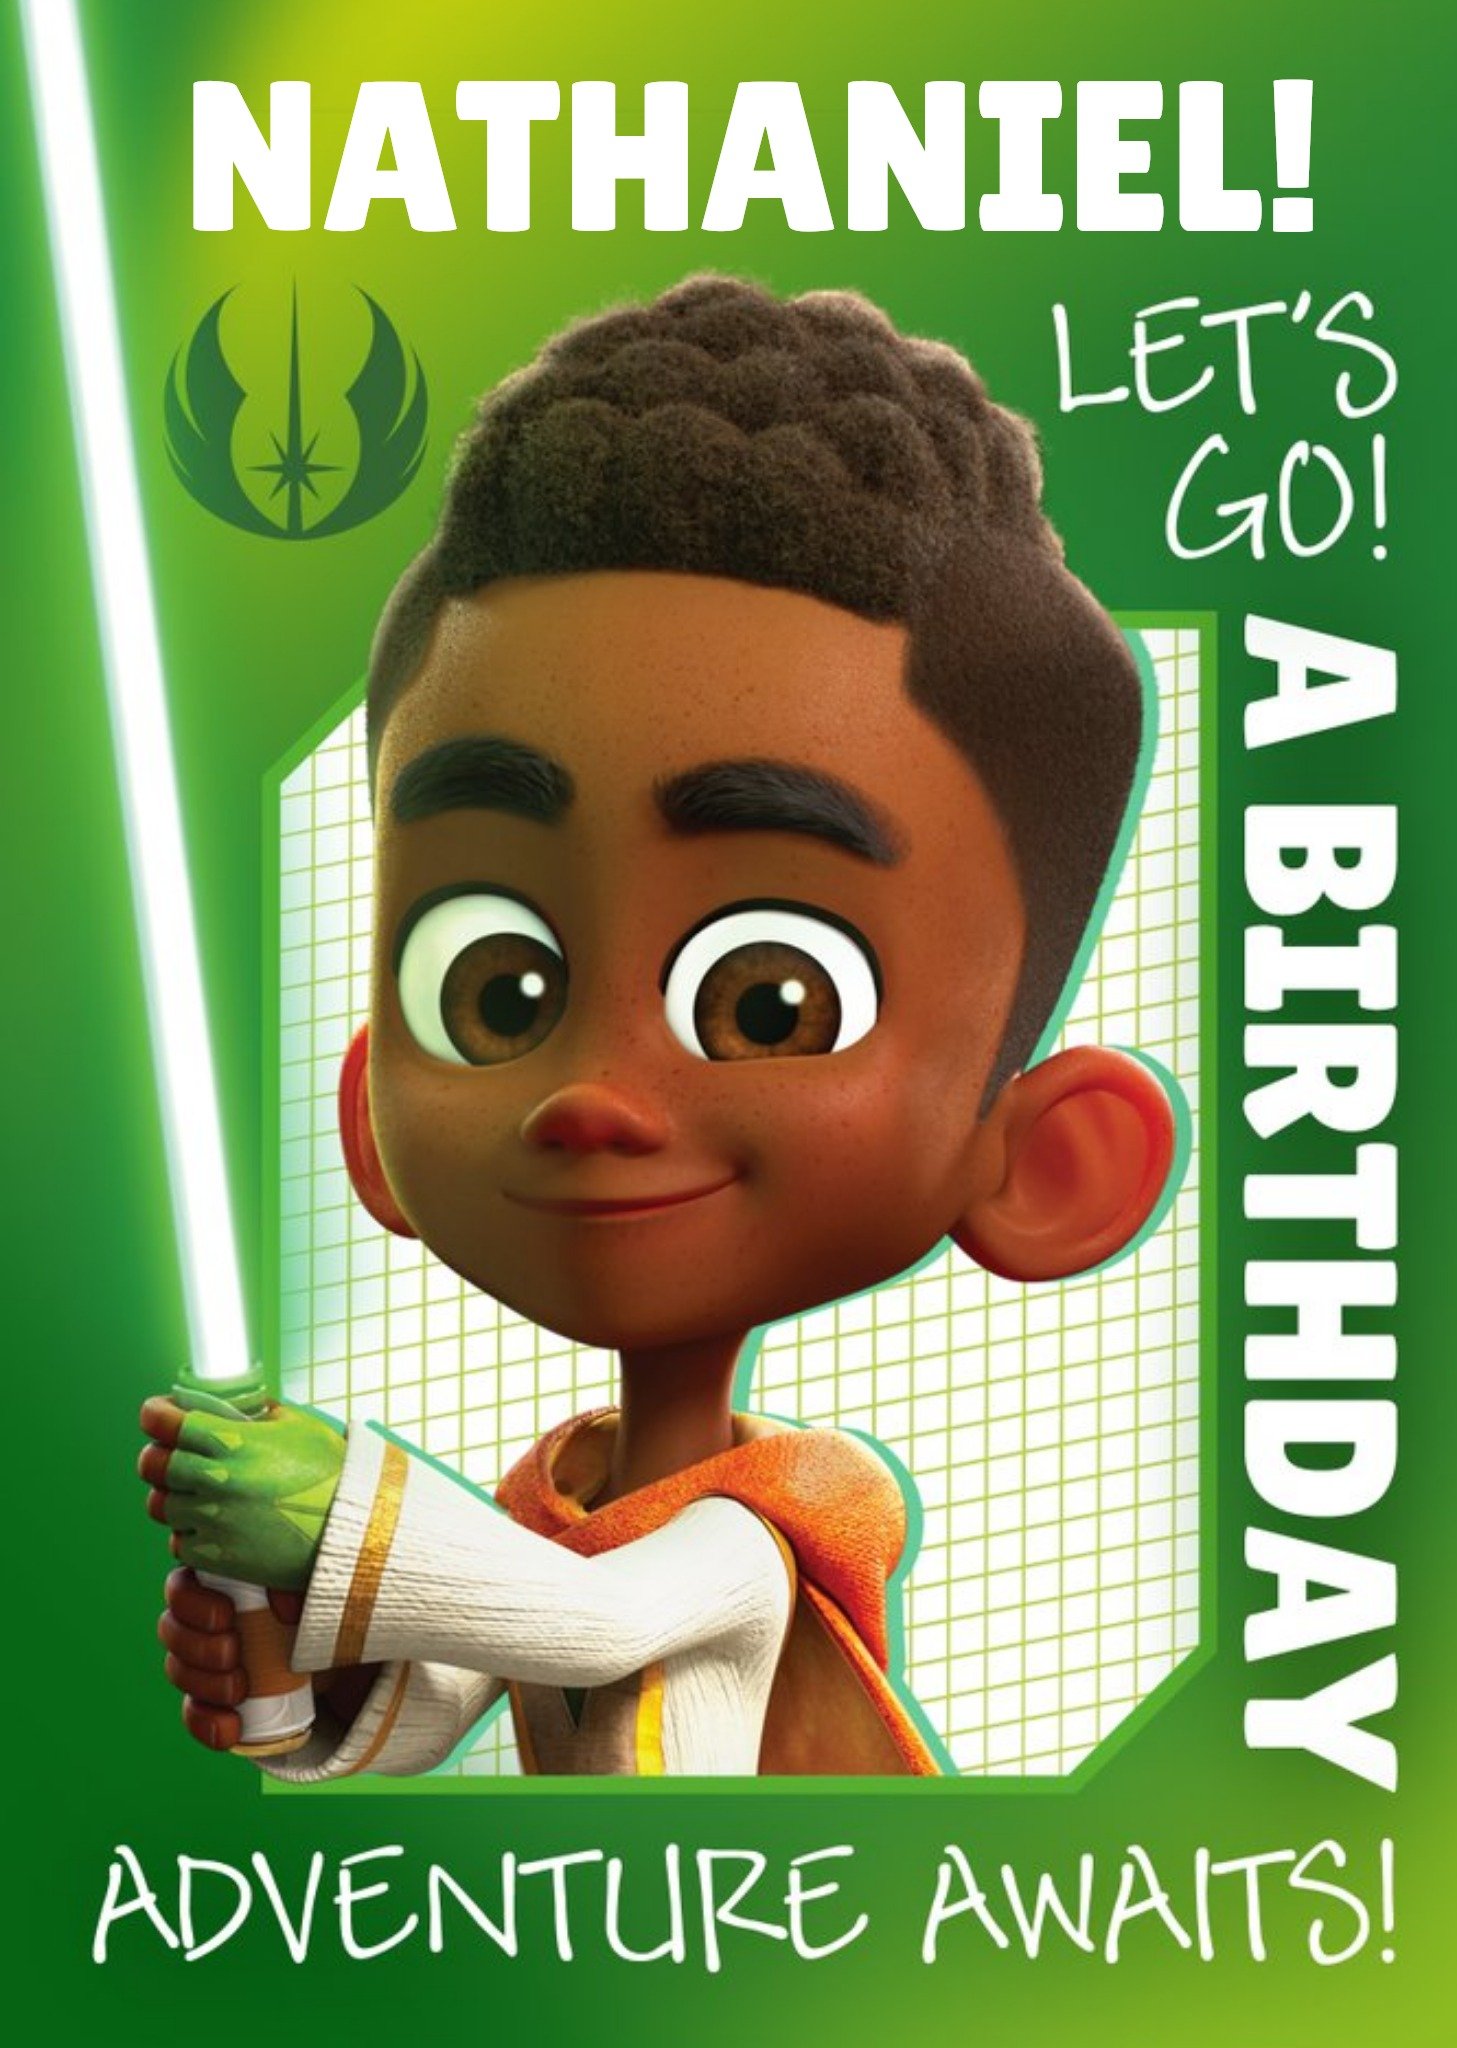 Disney Star Wars Young Jedi Adventures Birthday Card, Large